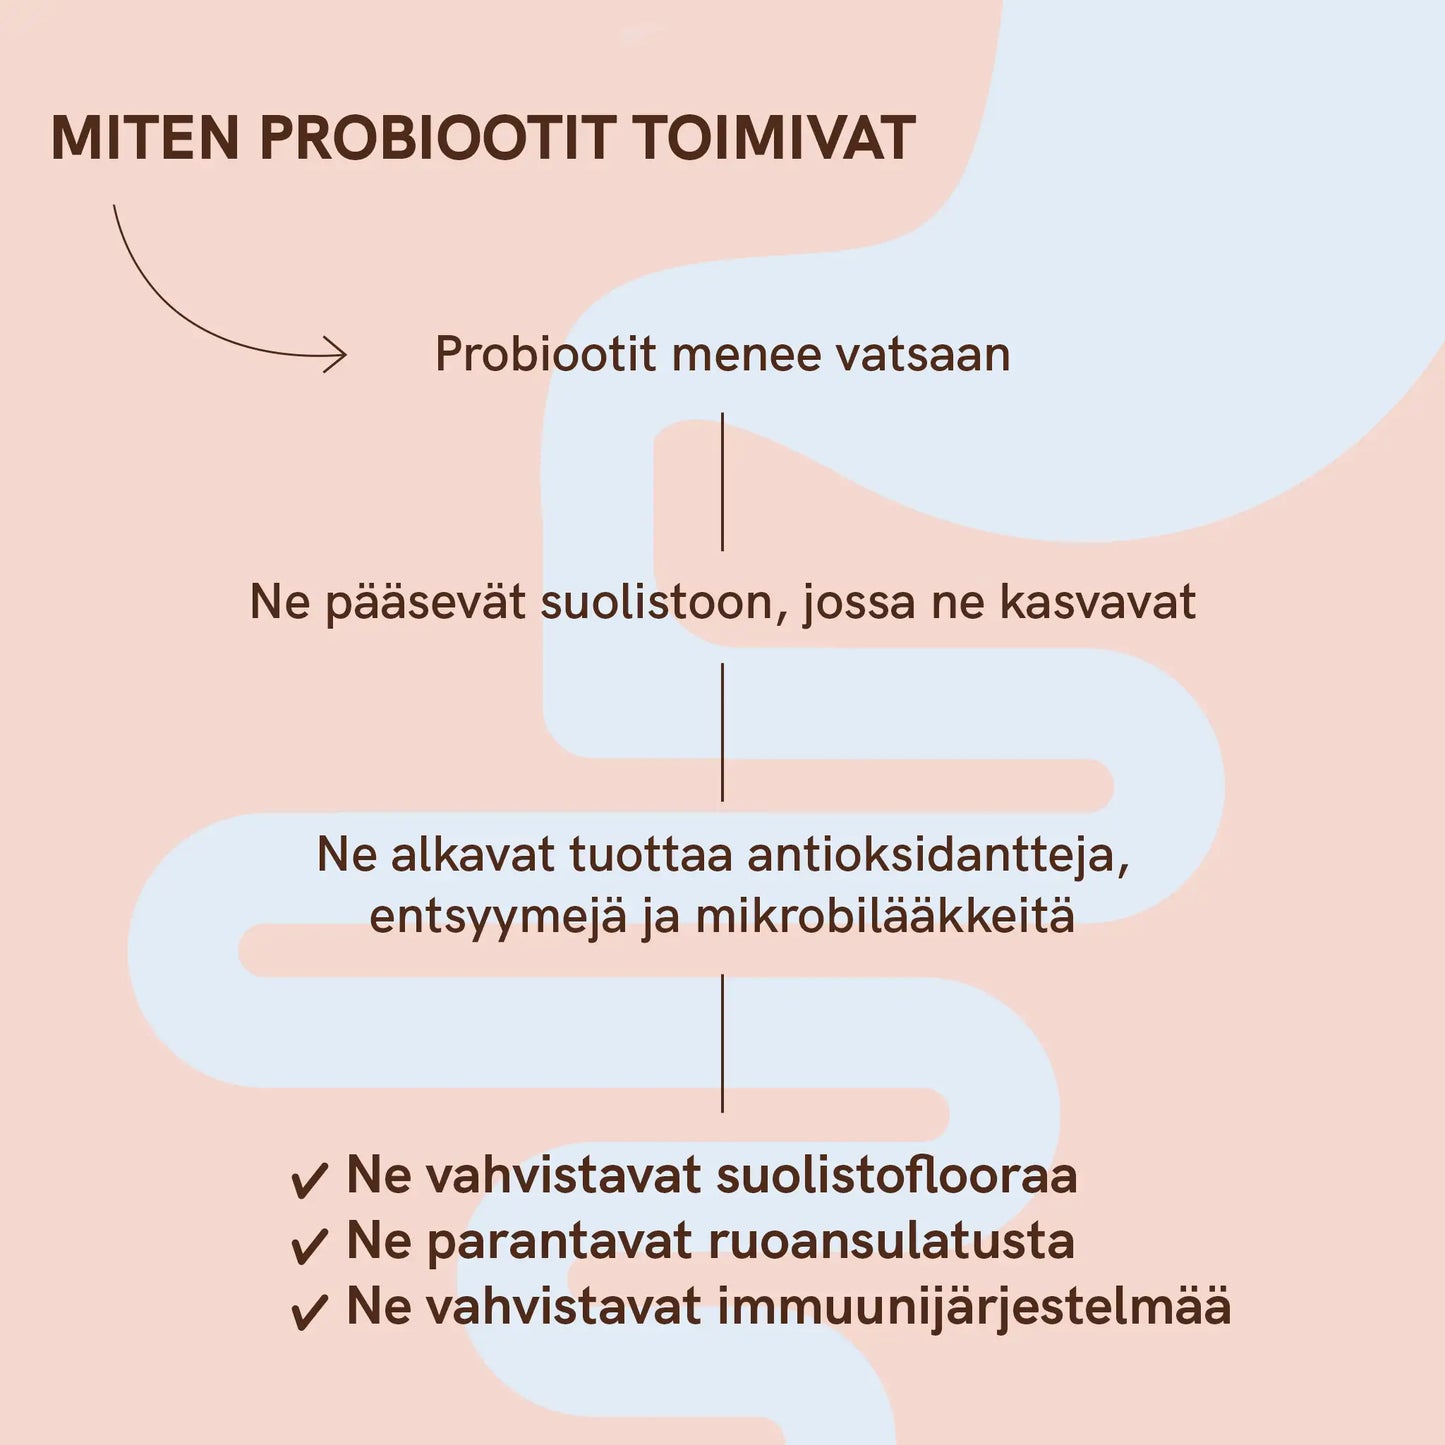 Probiootit